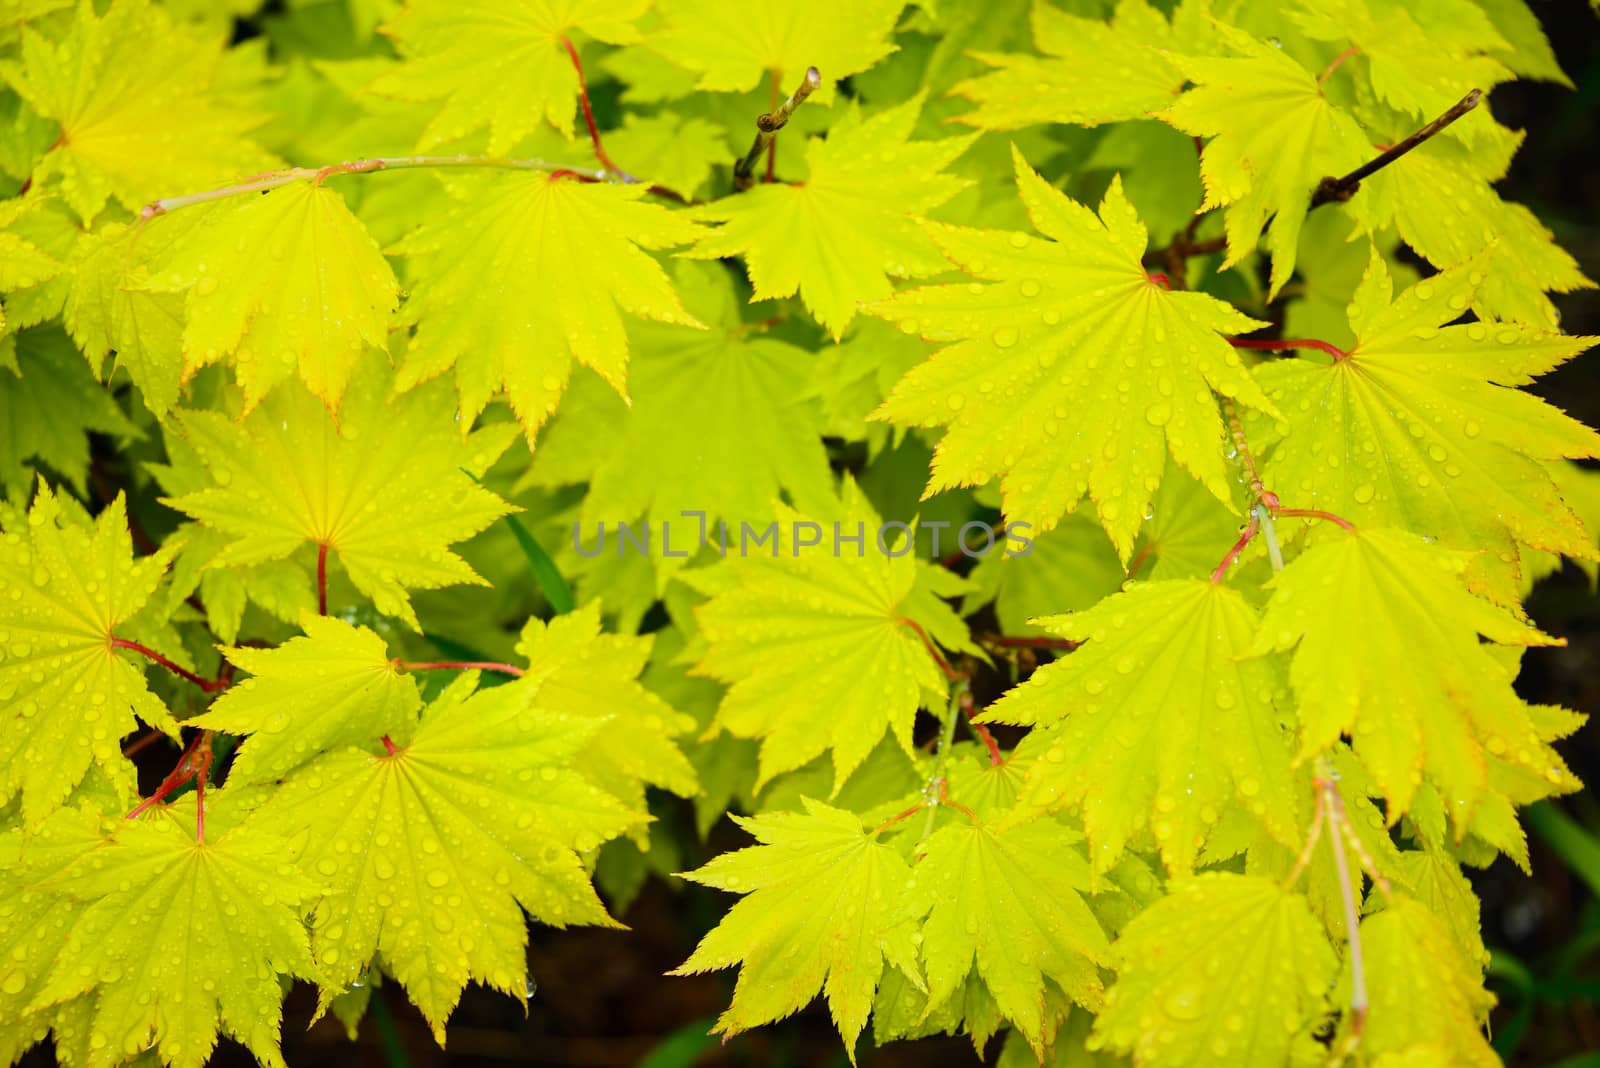 Yellow marple leaves with rain dropsin autumn colors